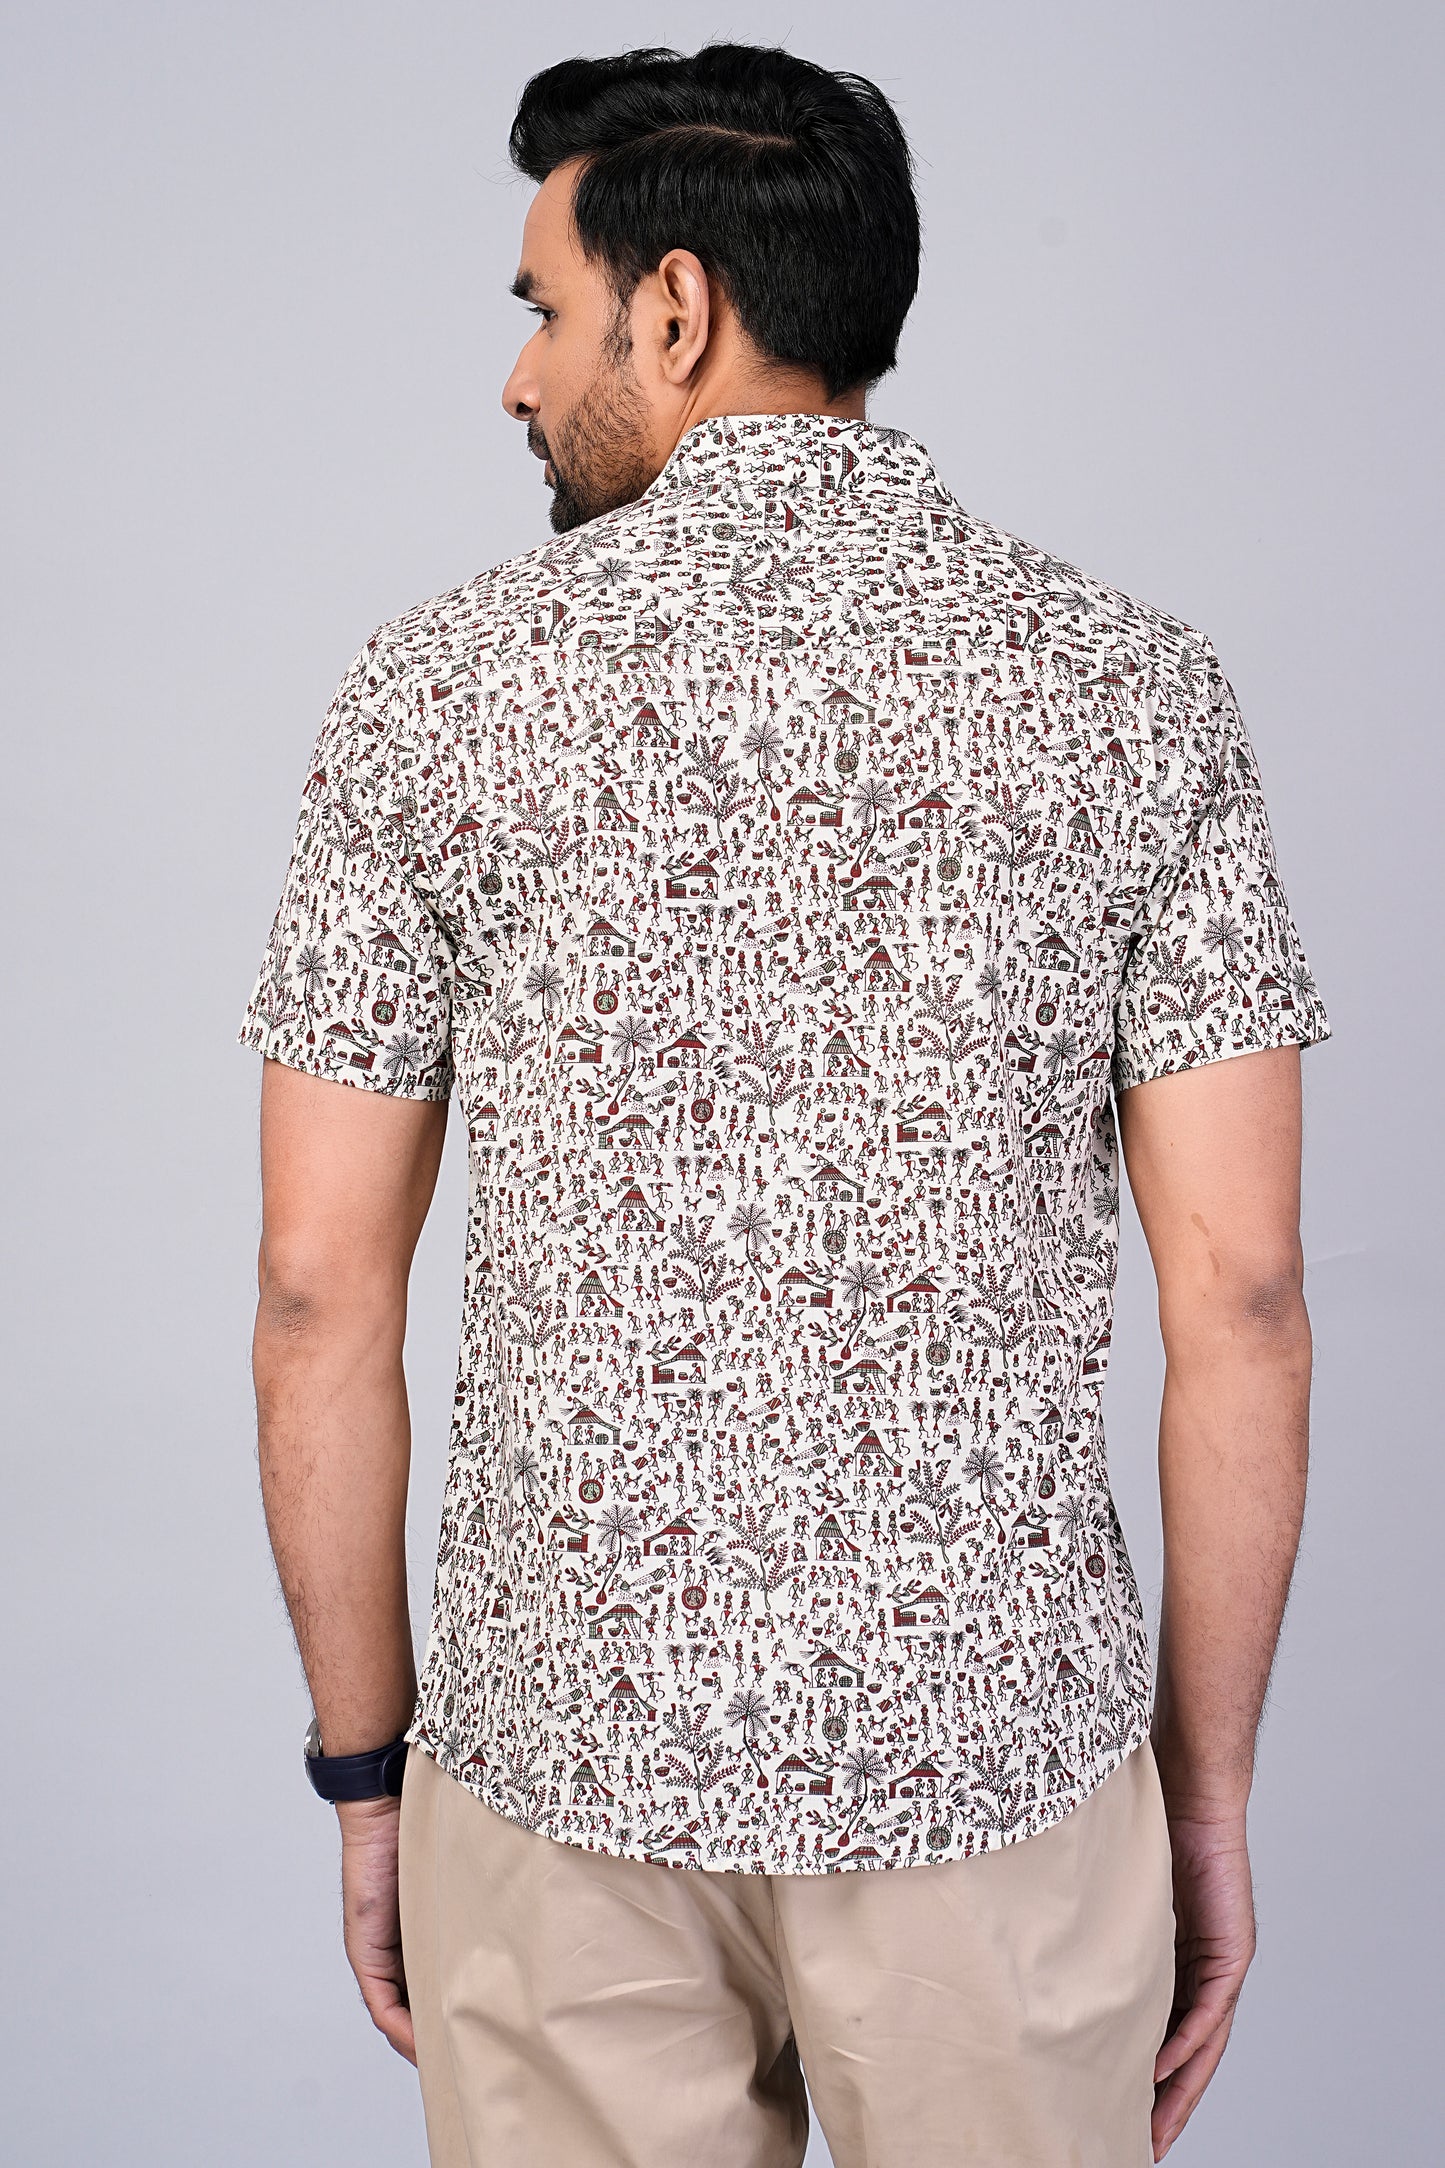 Men's Ethnic Motif Printed Half-Sleeves shirts